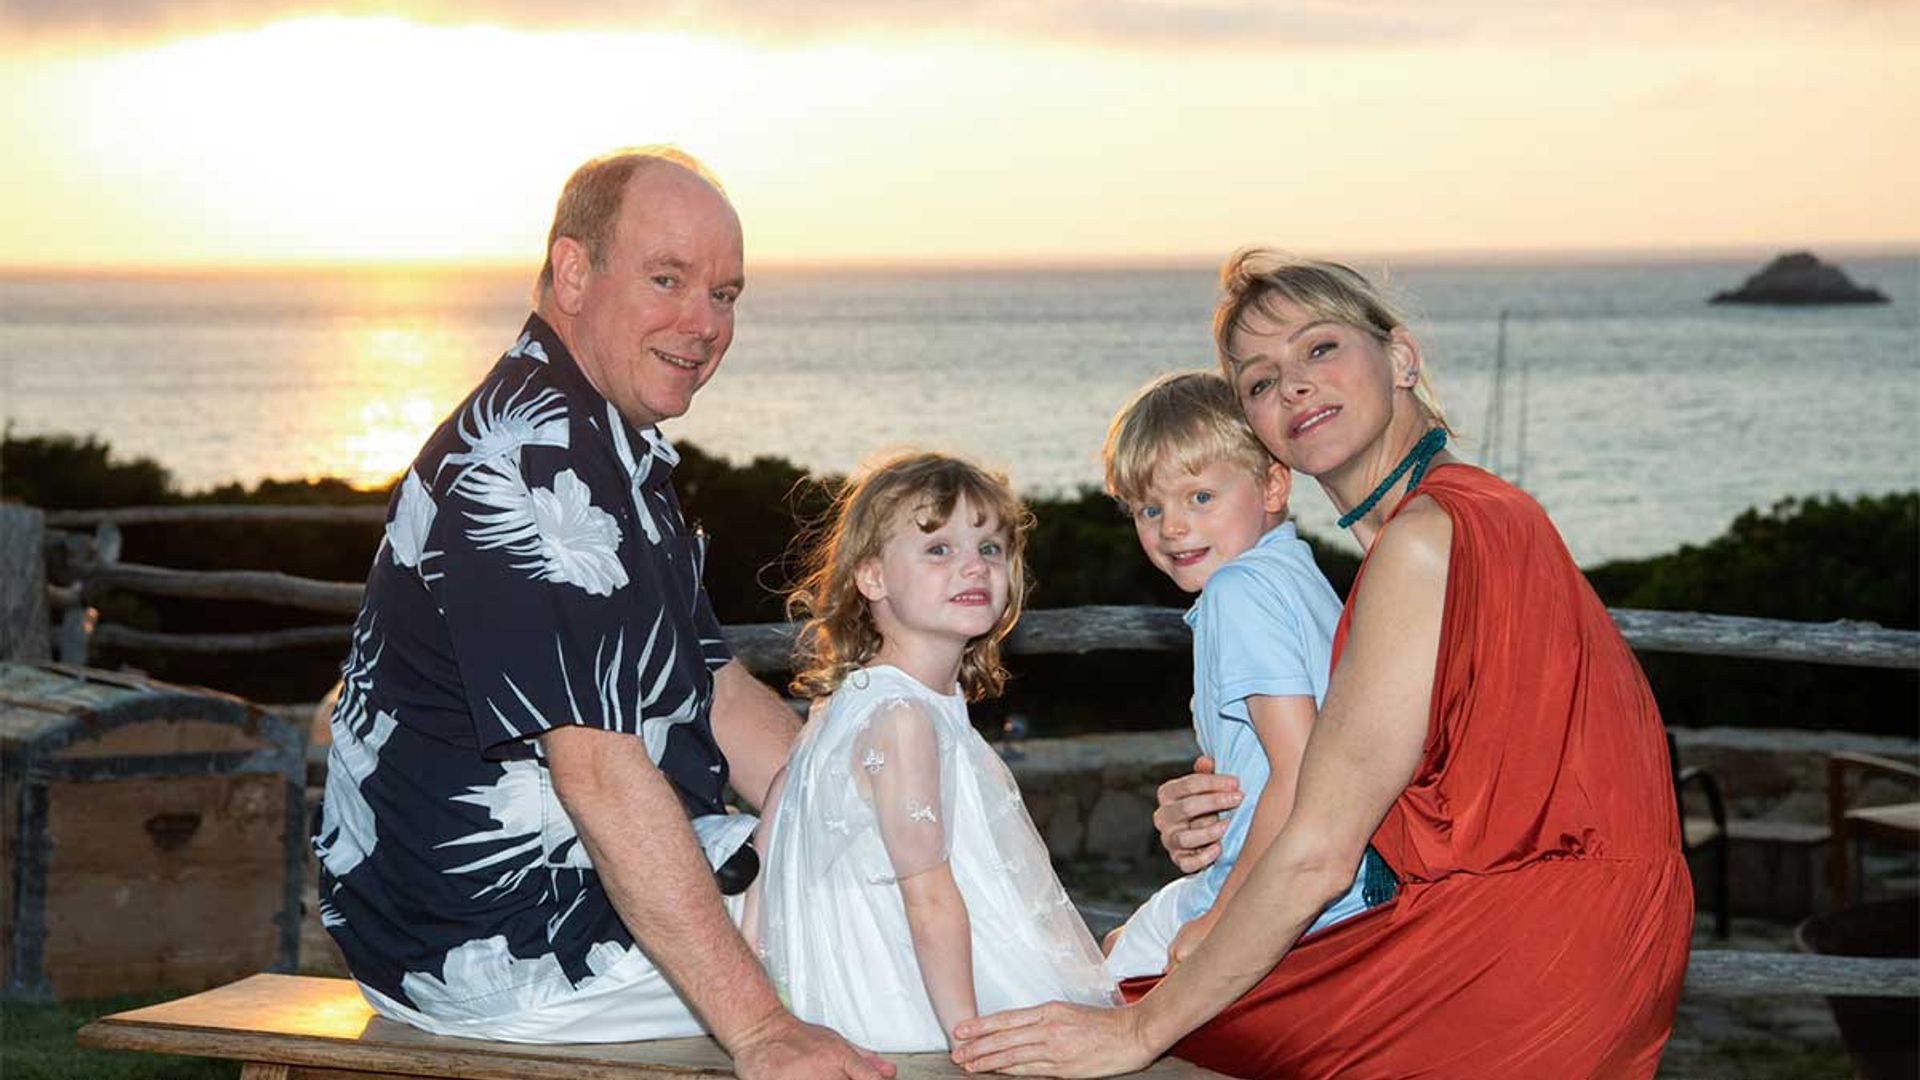 Prince Albert and Princess Charlene share dreamy sunset photo with twins on wedding anniversary